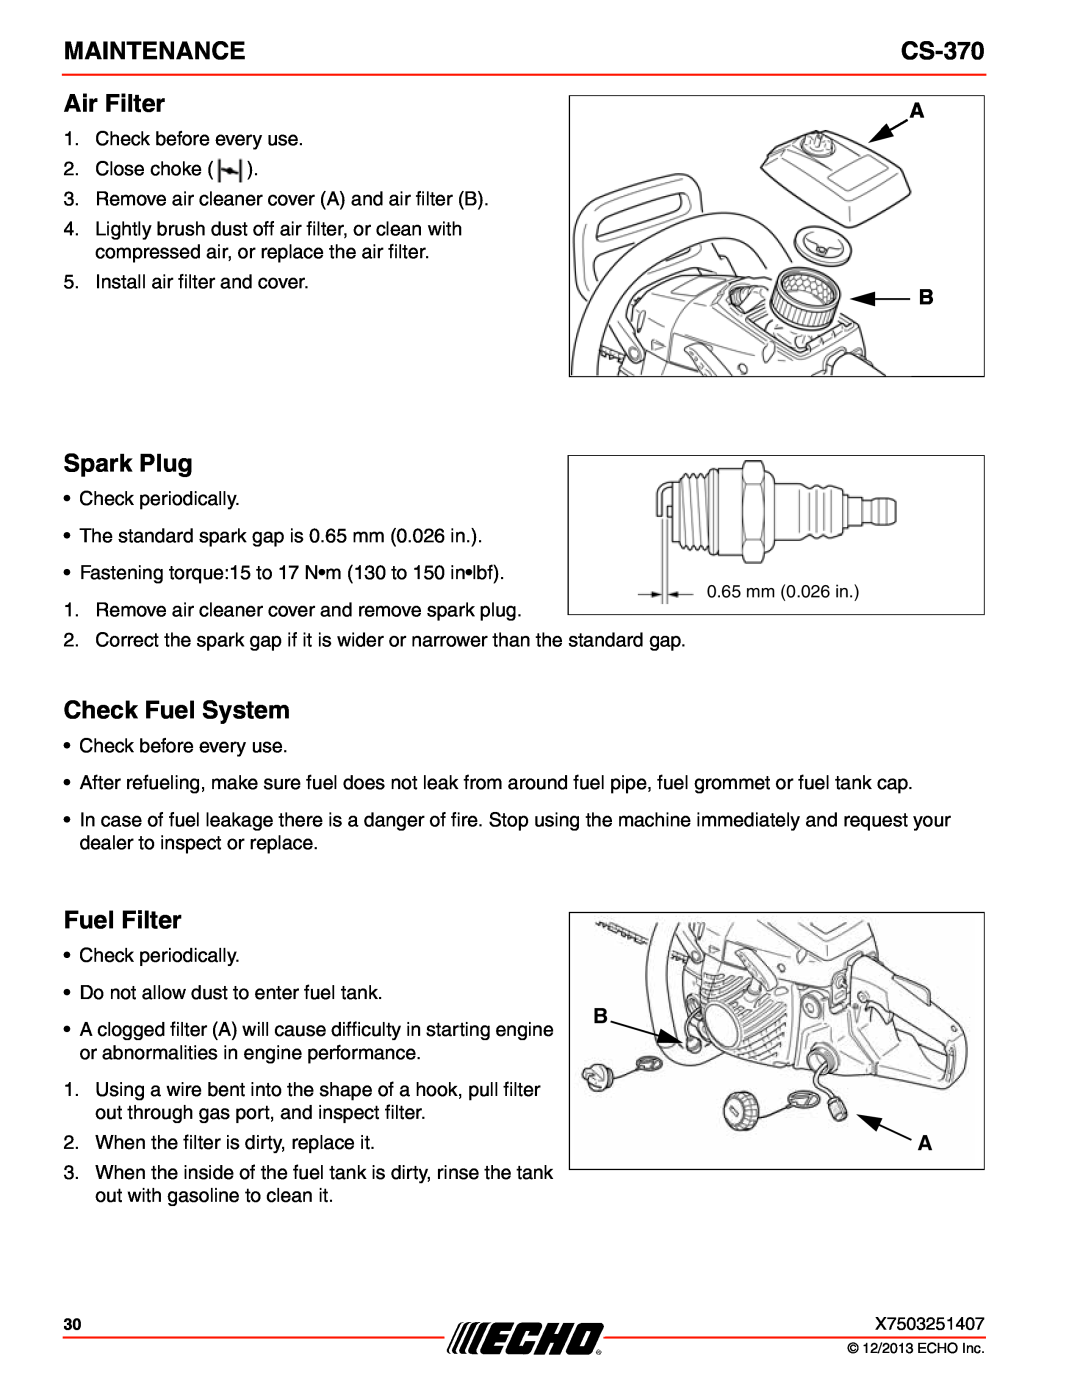 Echo CS-370 instruction manual Air Filter, Spark Plug, Check Fuel System, Fuel Filter, Maintenance 